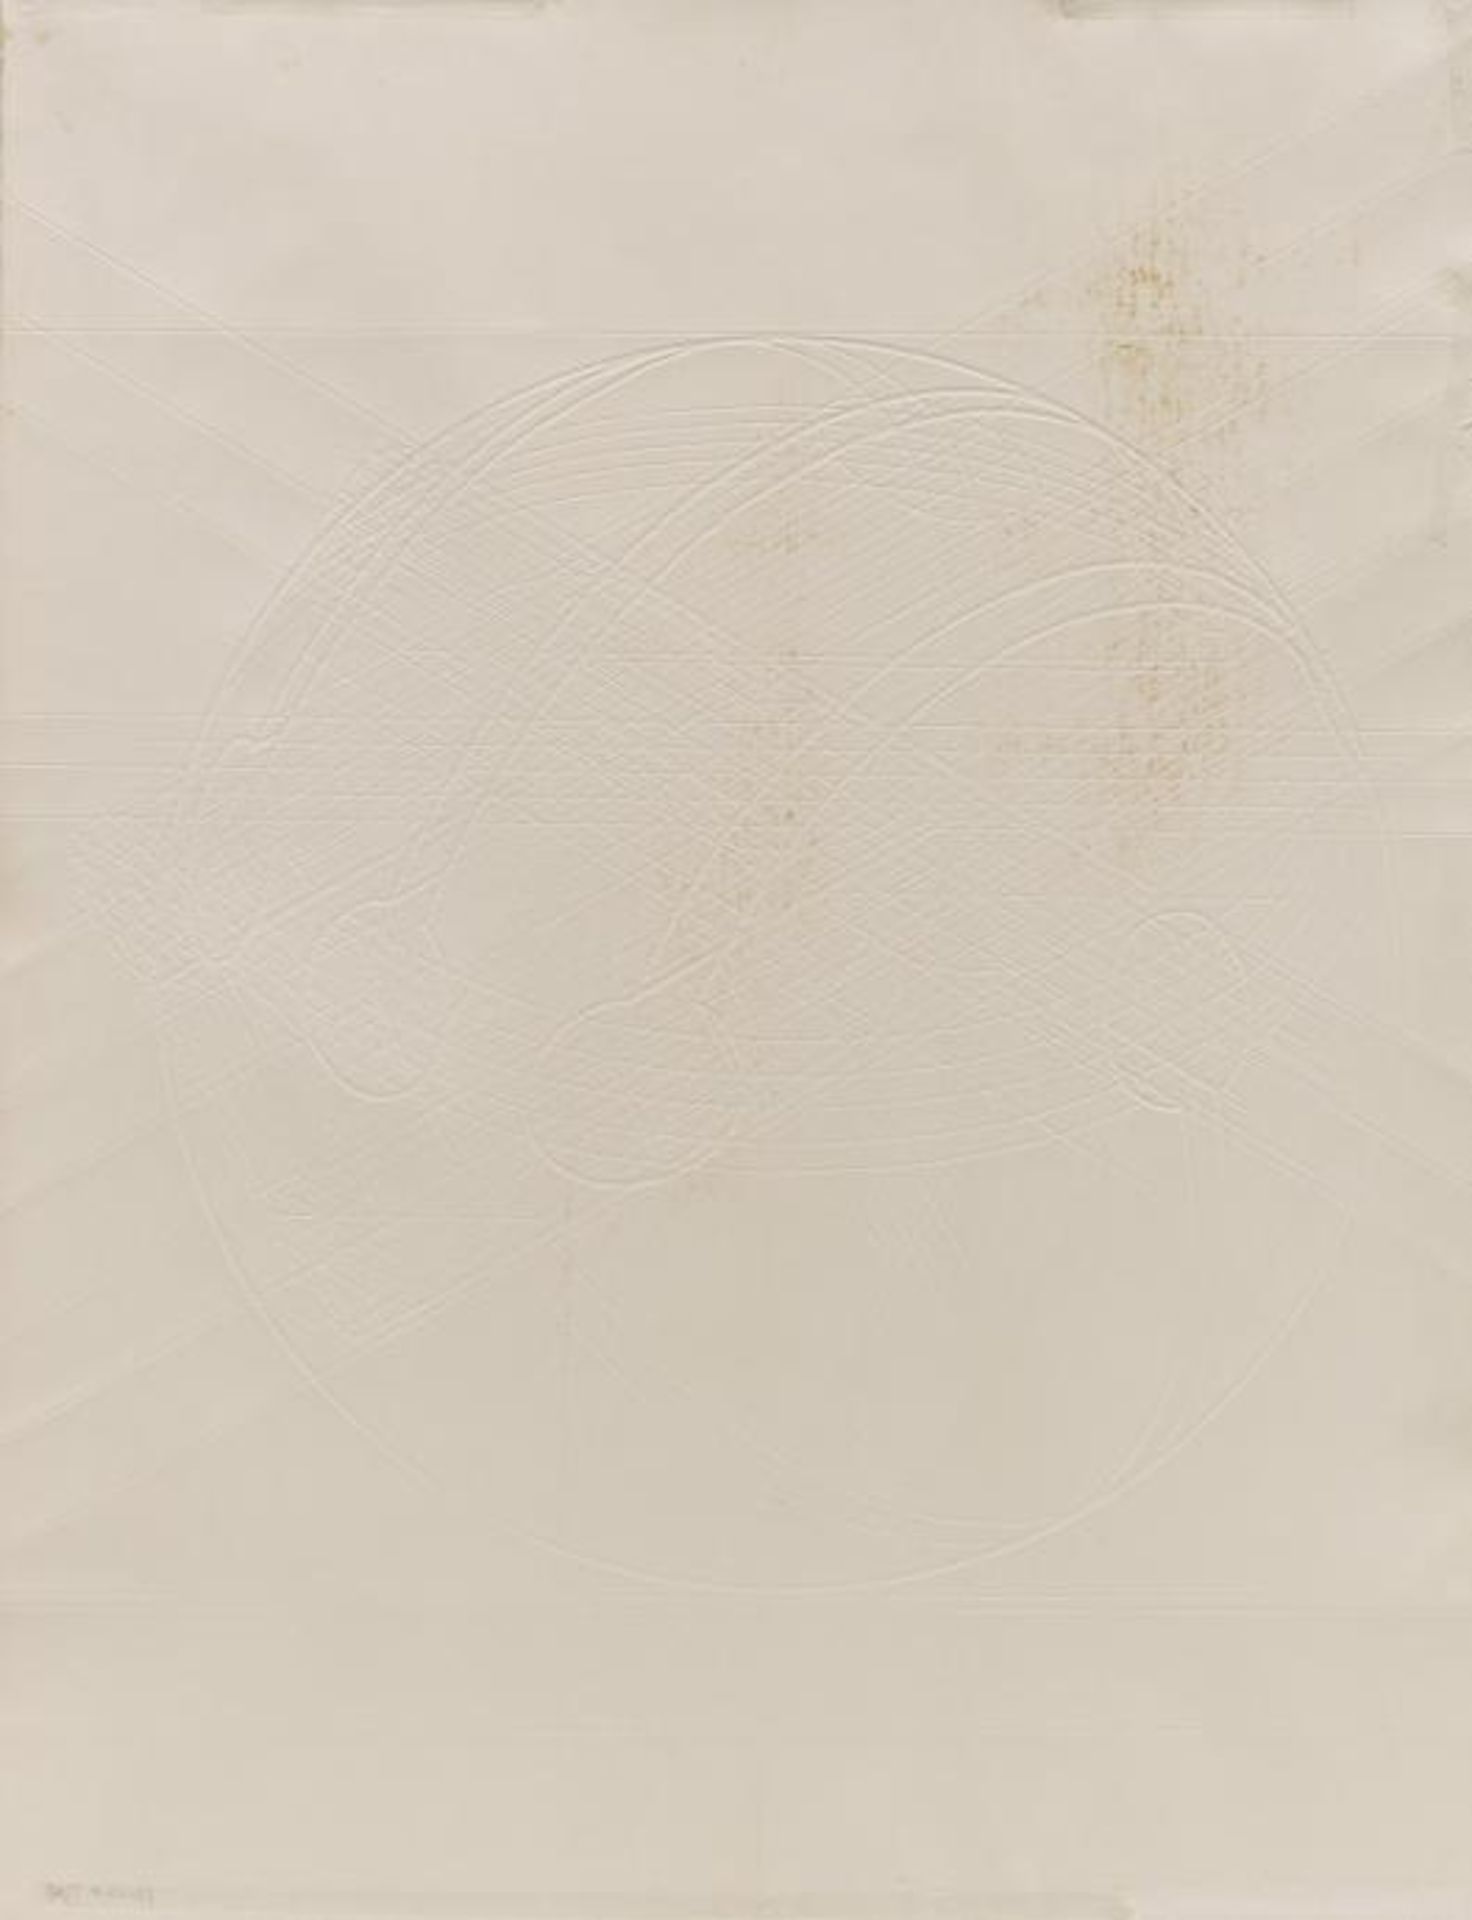 POMODORO, ARNALDO1926 Morciano di RomagnaOhne Titel. 1969. Prägedruck auf Velin. 76 x 57,5cm - Bild 4 aus 4